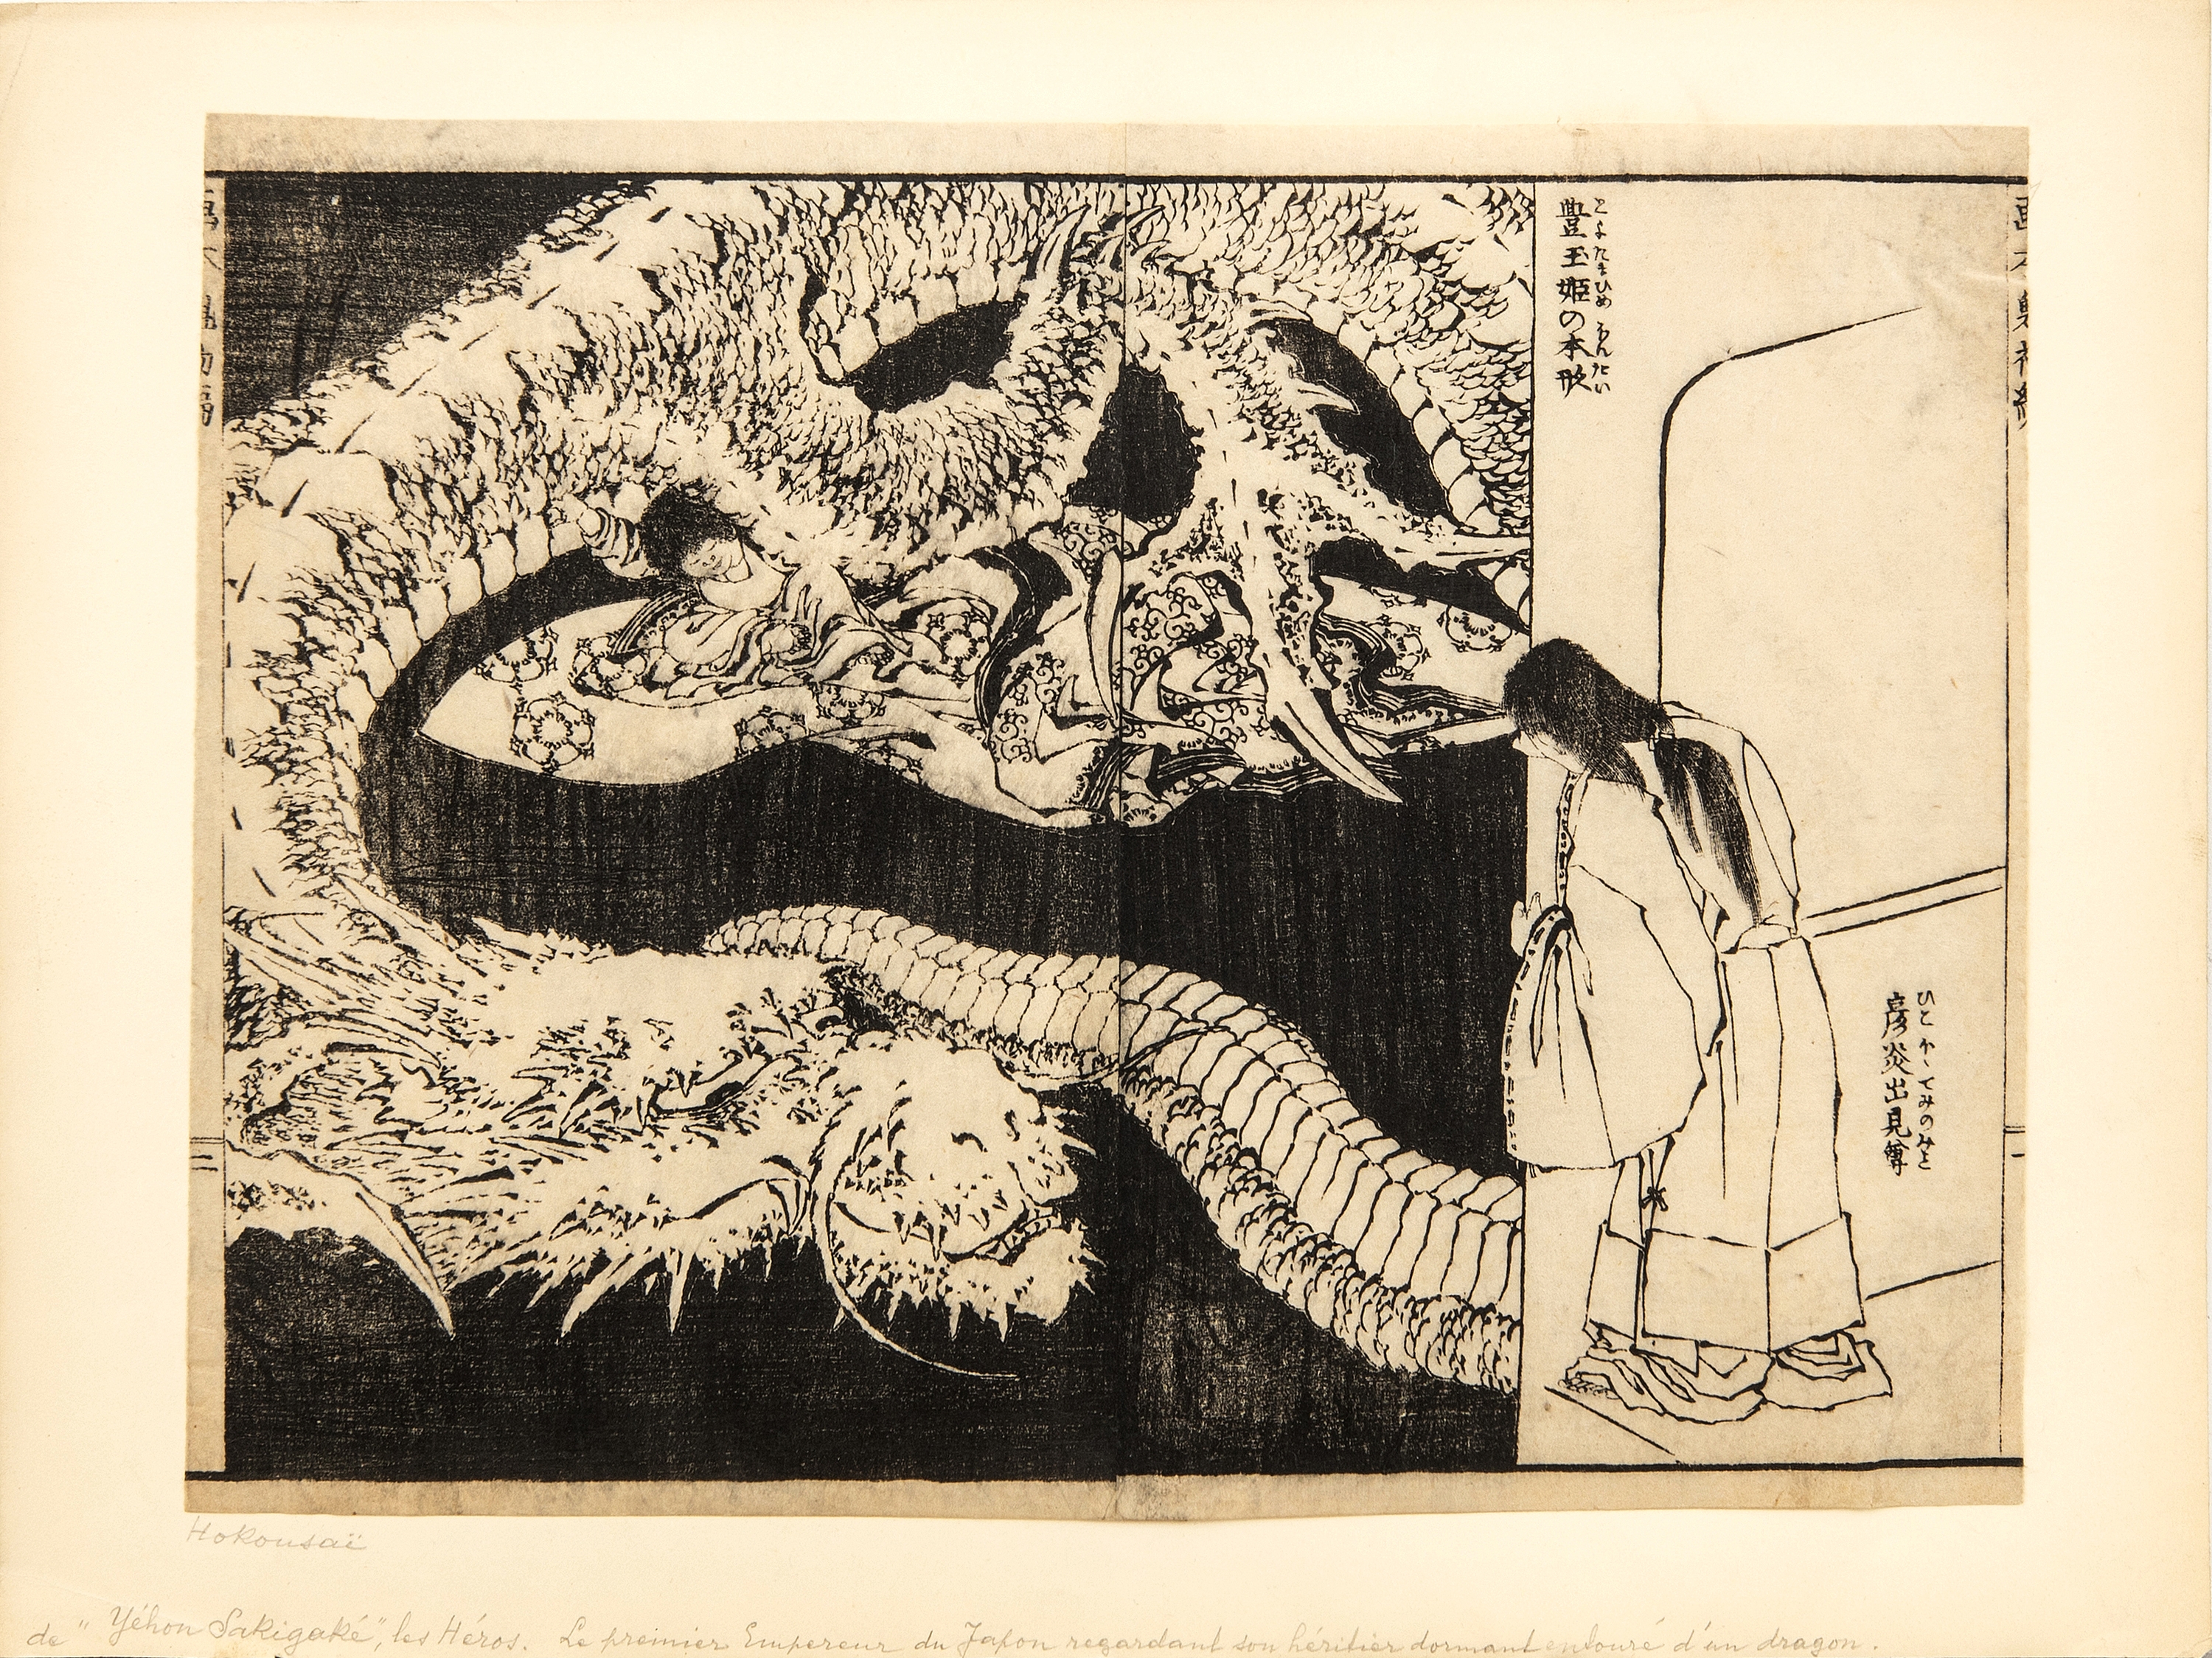 Wakan ehon sakigake sho-hen 和漢絵本魁初編 (Picture Book of the Warrior Vanguard in Japan and China (vol. 1) by Katsushika Hokusai, 1836